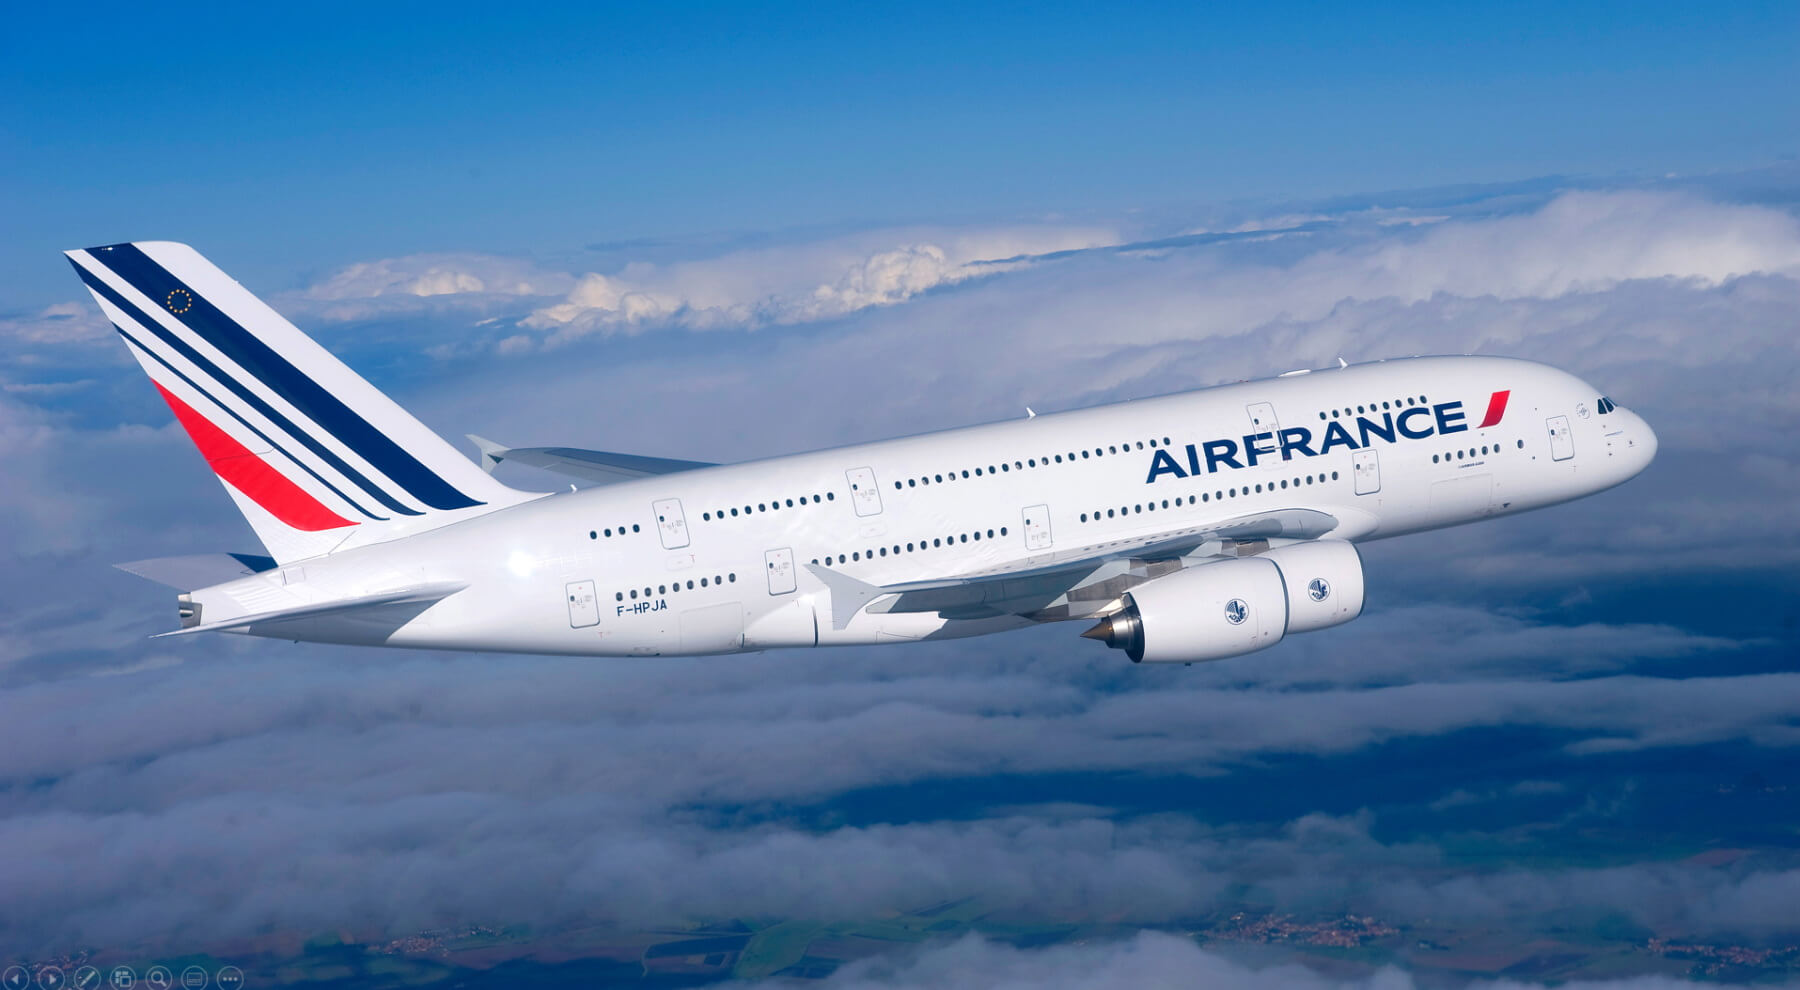 Air France customer testimonial on participative innovation